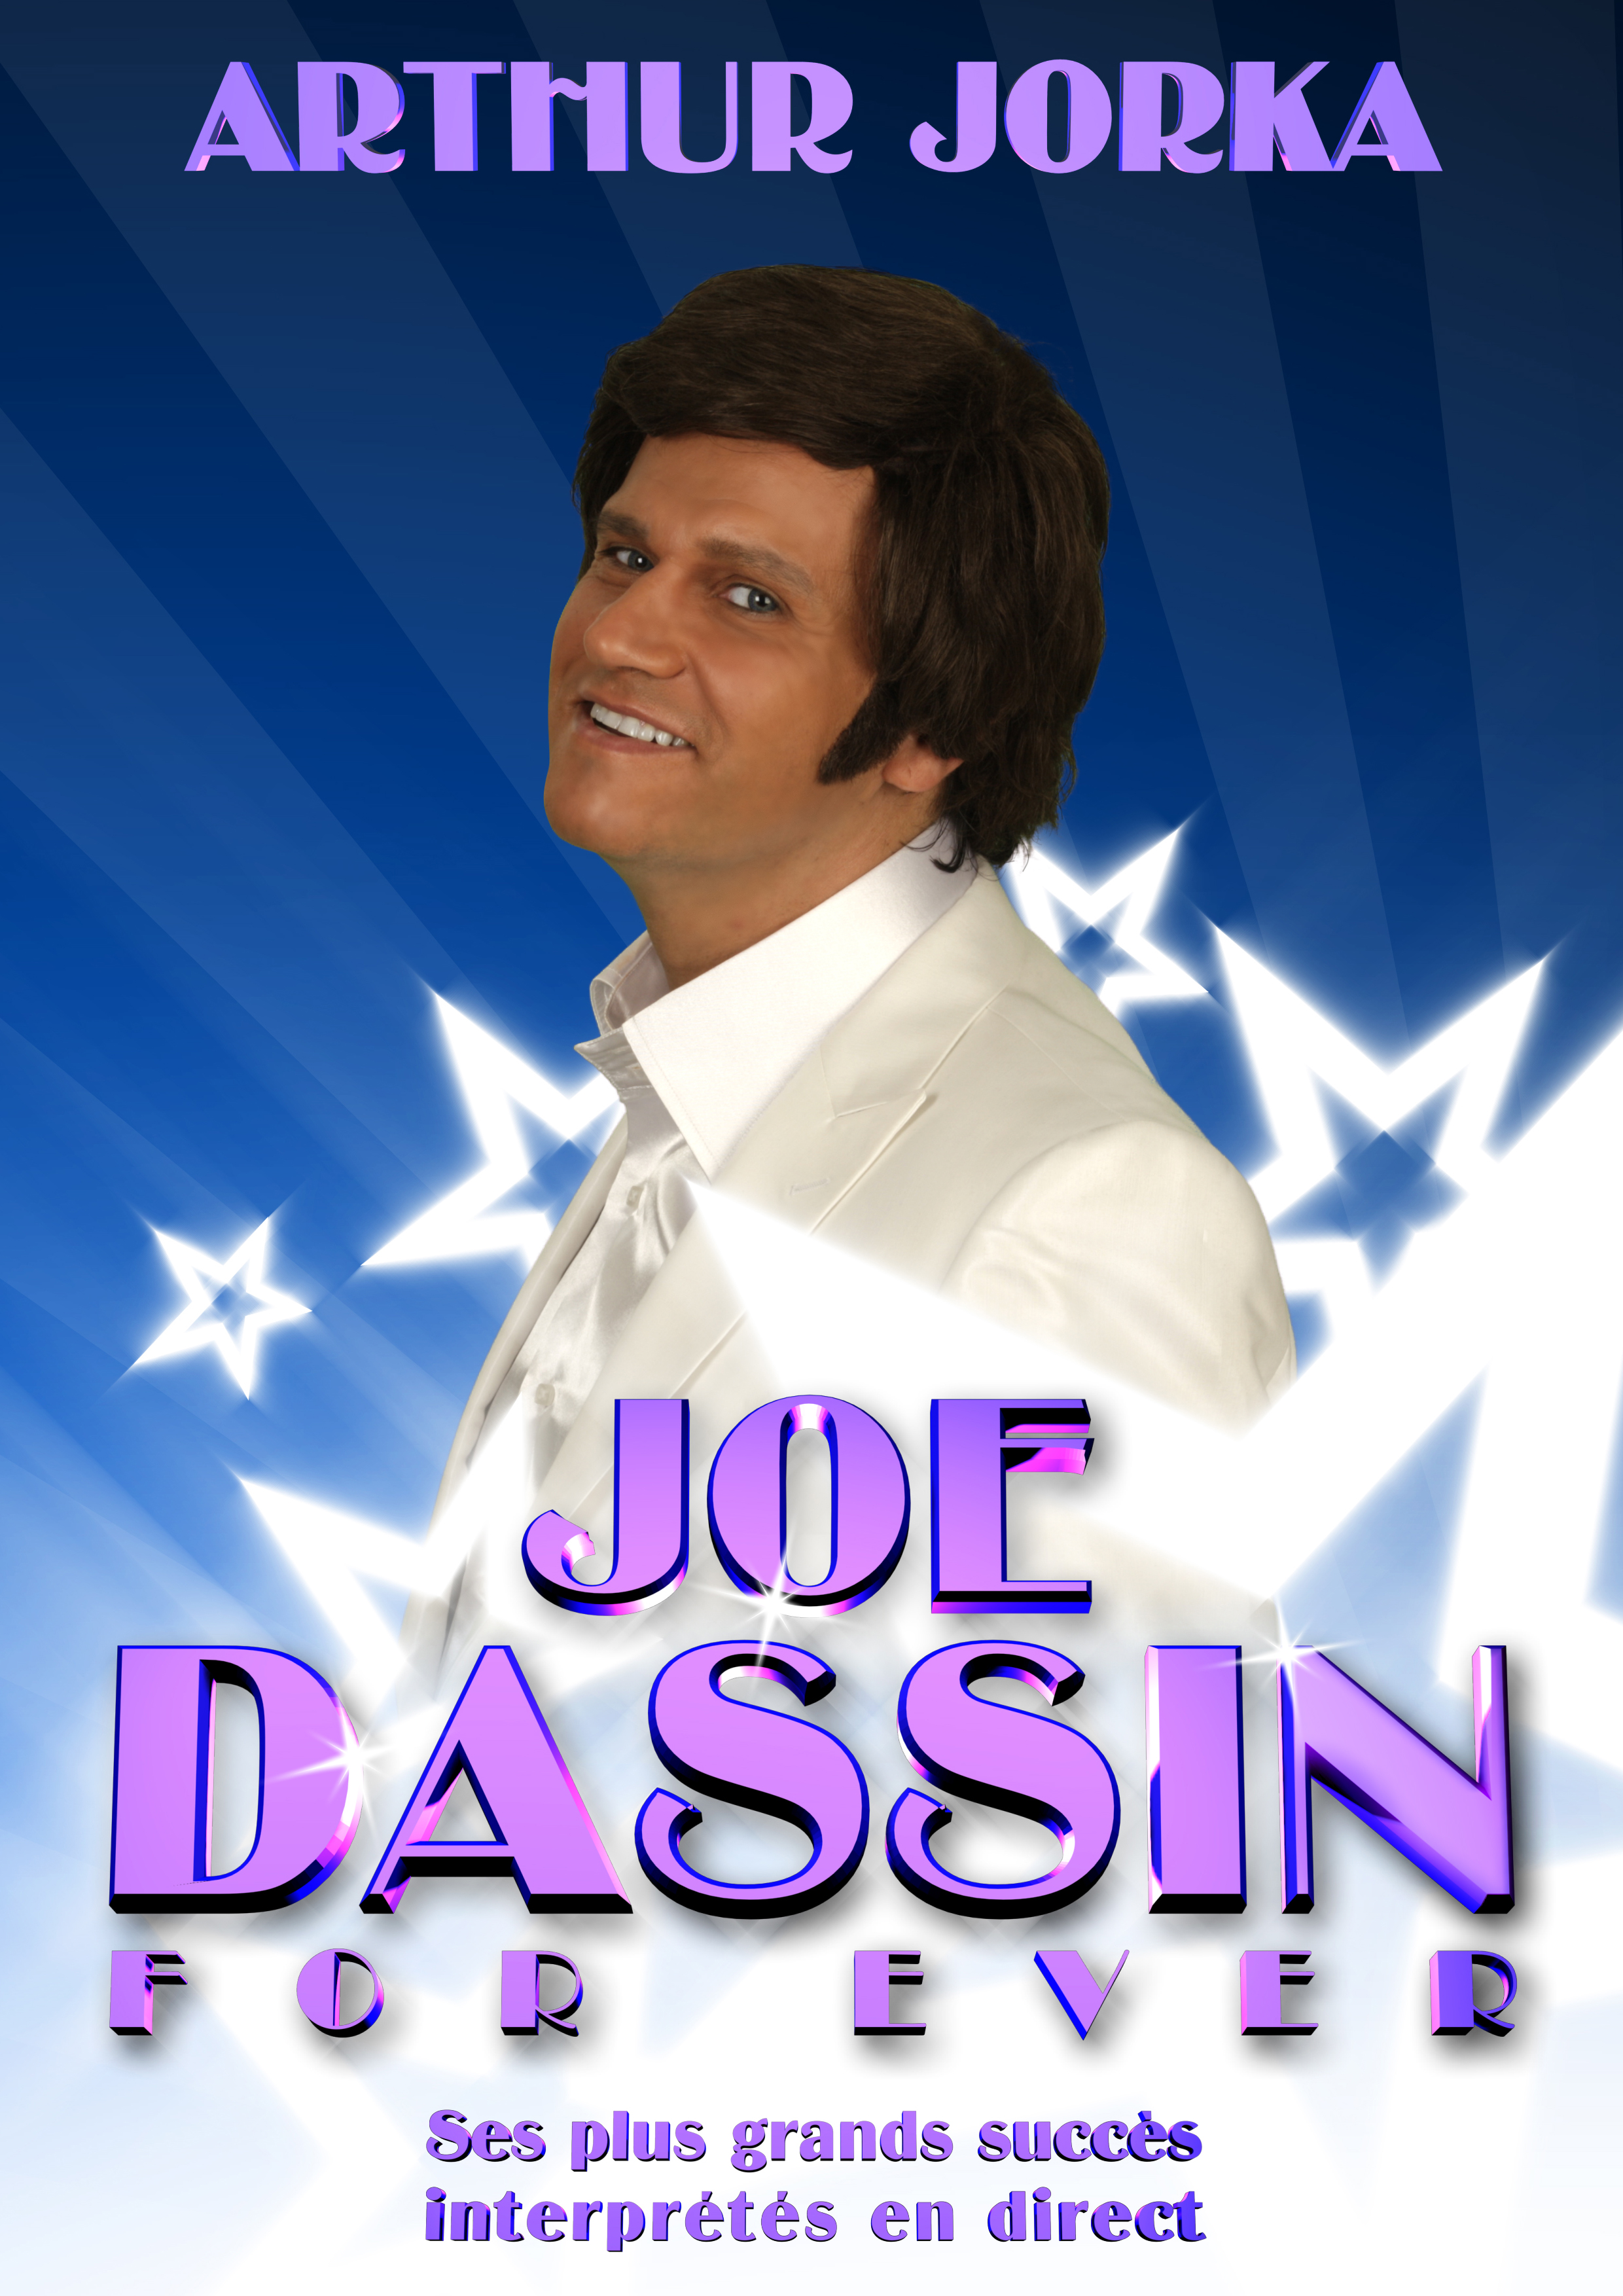 Affiche hommage à Joe Dassin